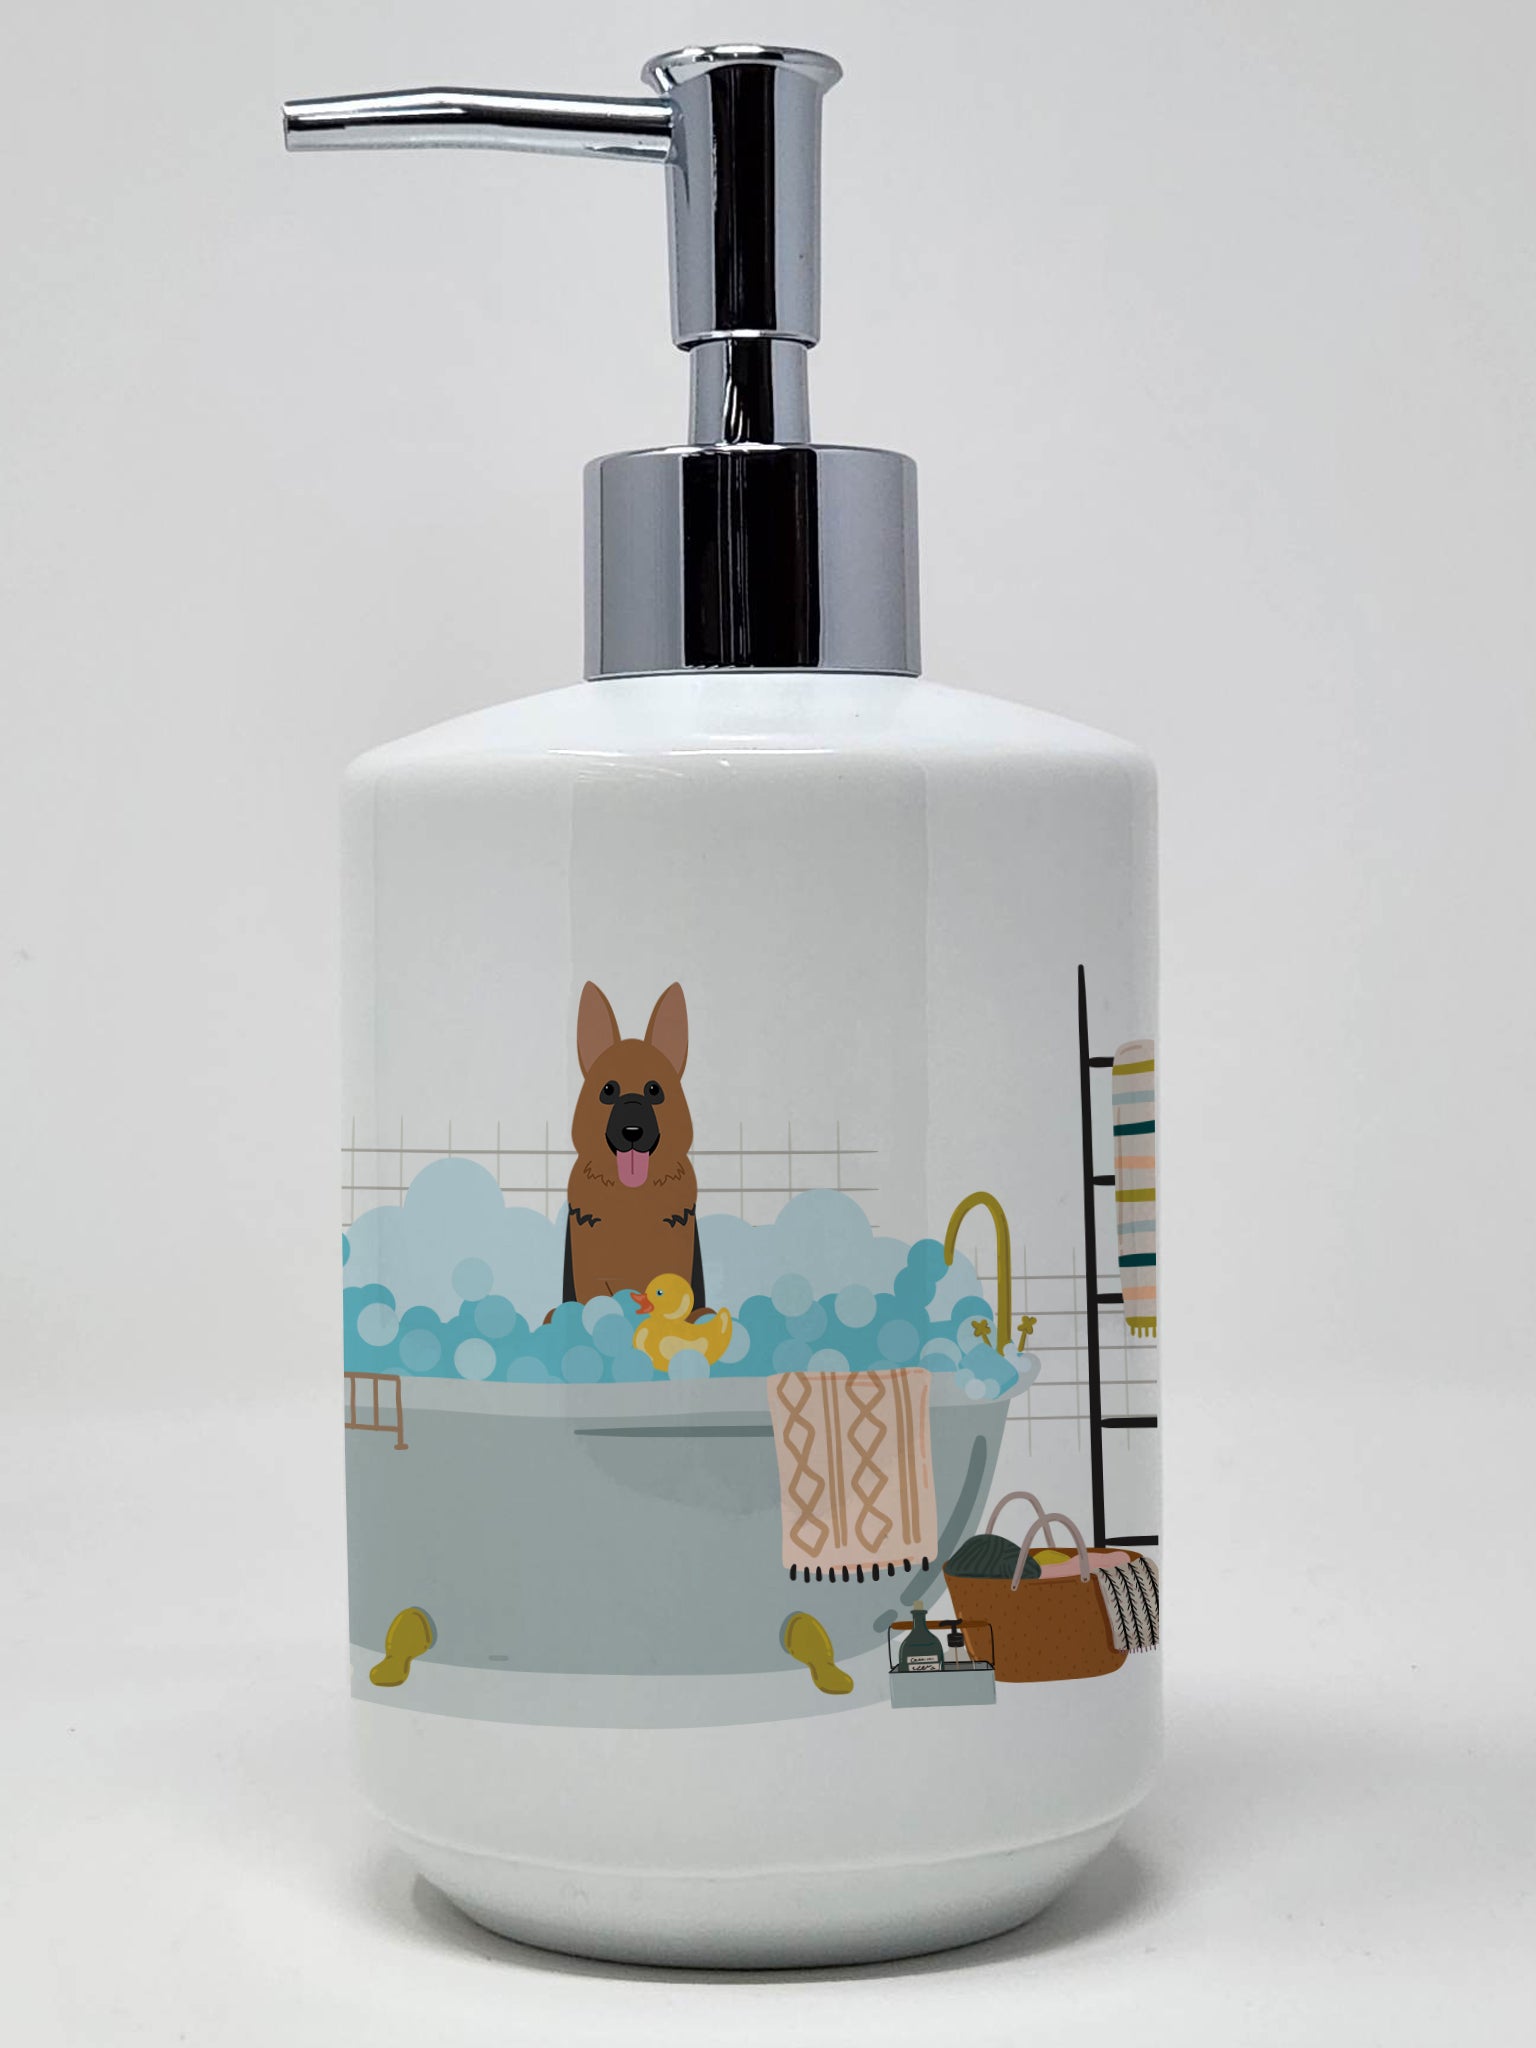 Buy this German Shepherd in Bathtub Ceramic Soap Dispenser